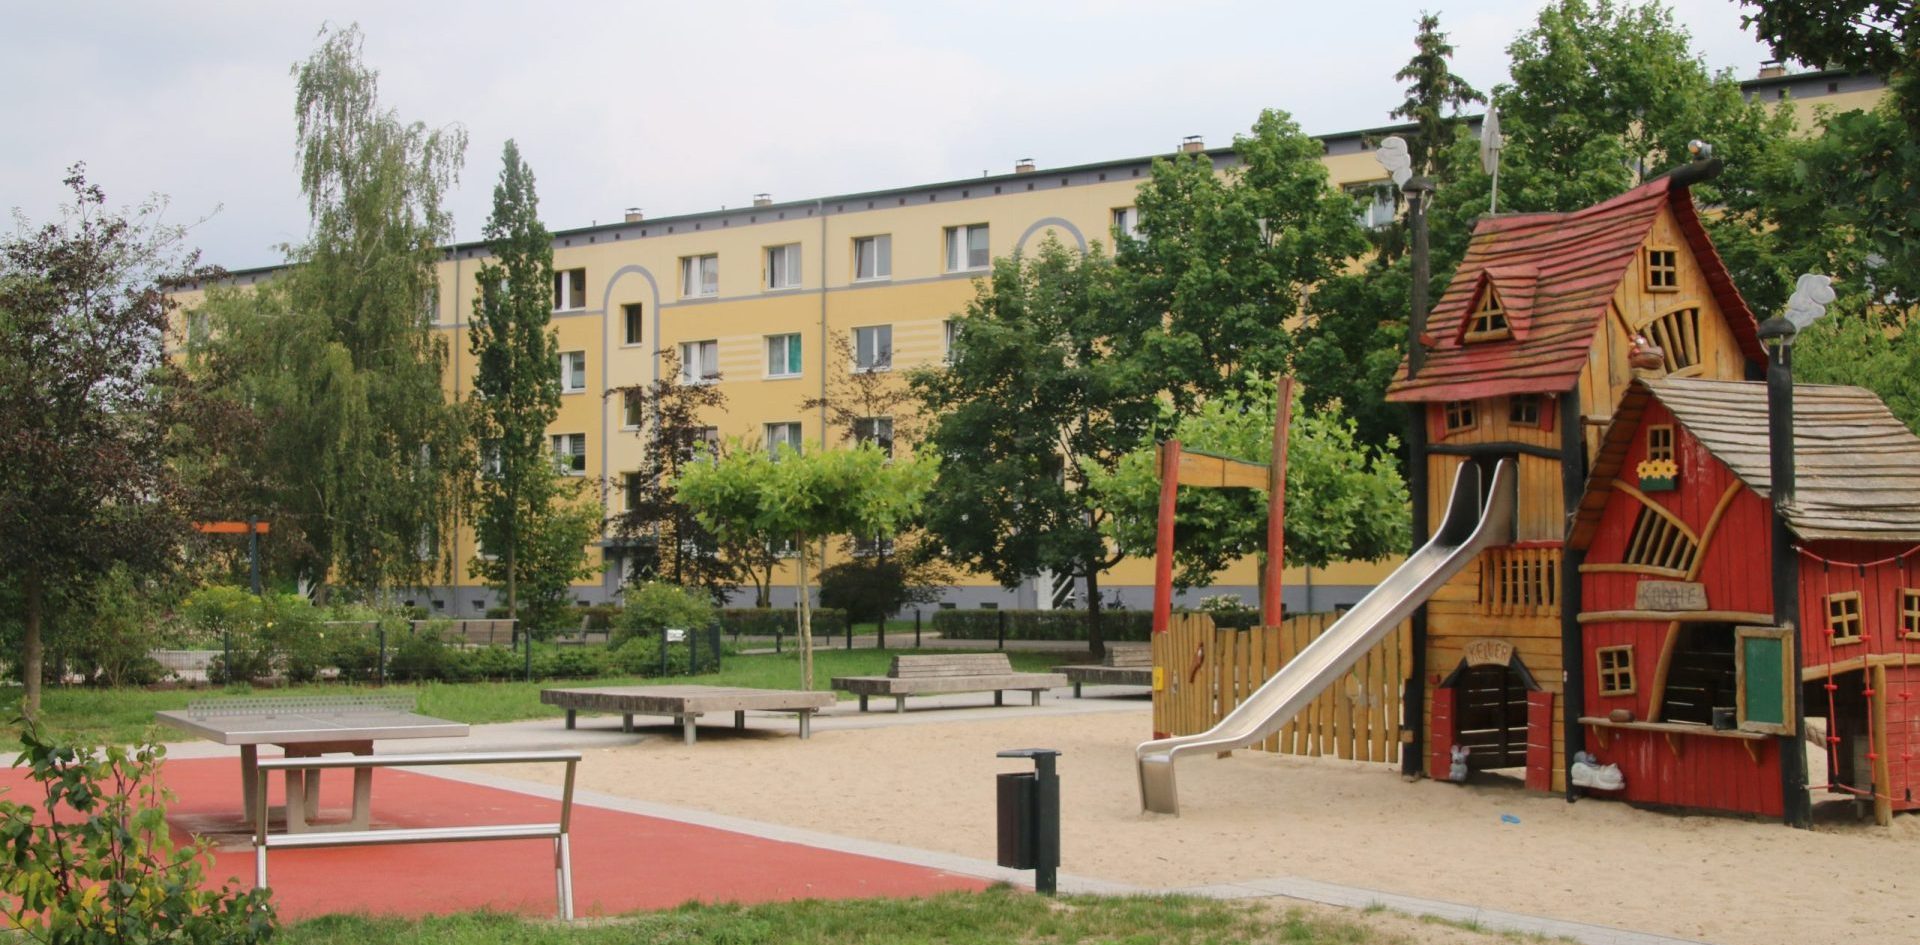 Spielplatz Paul-Schreier-Platz